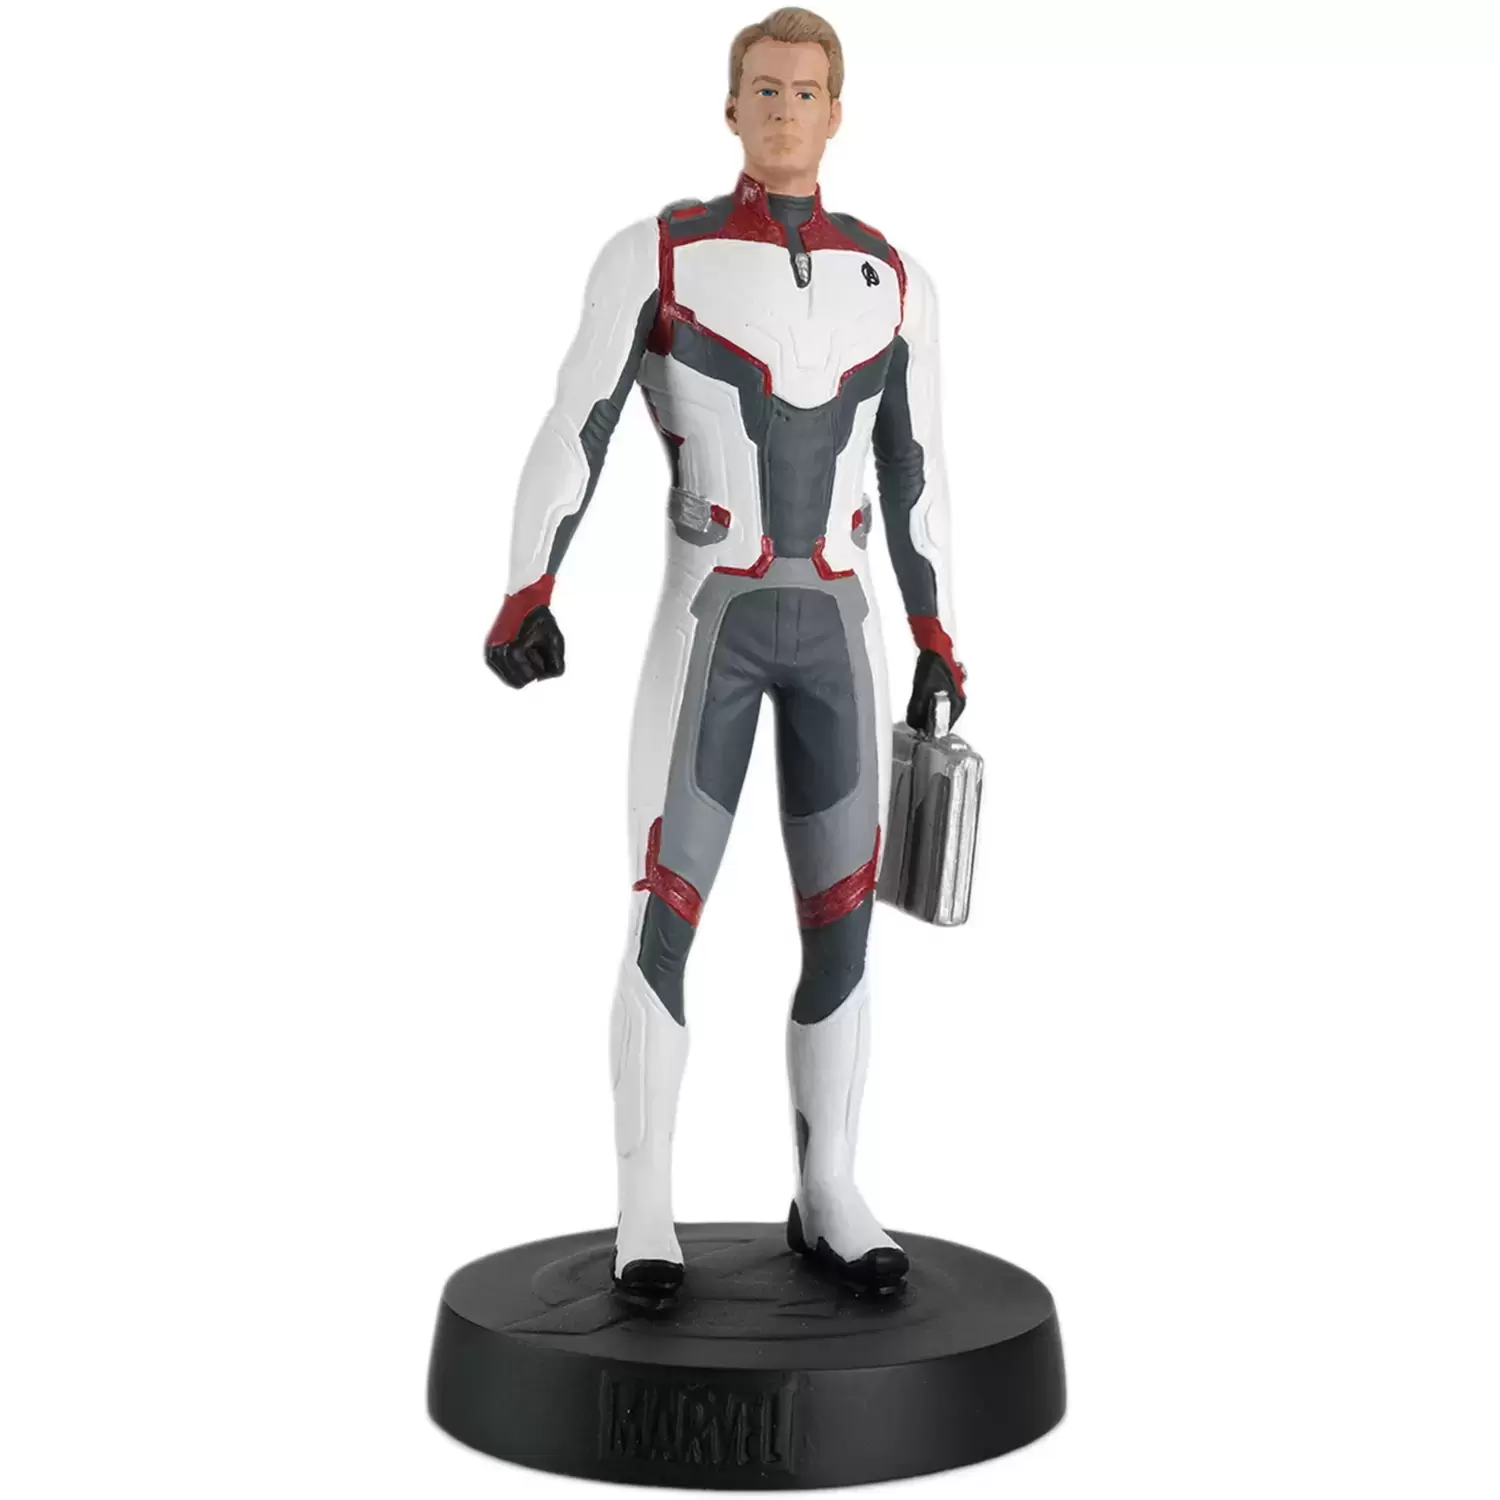 Figurines des films Marvel - Captain America Team Suit Figurine (Avengers: Endgame)